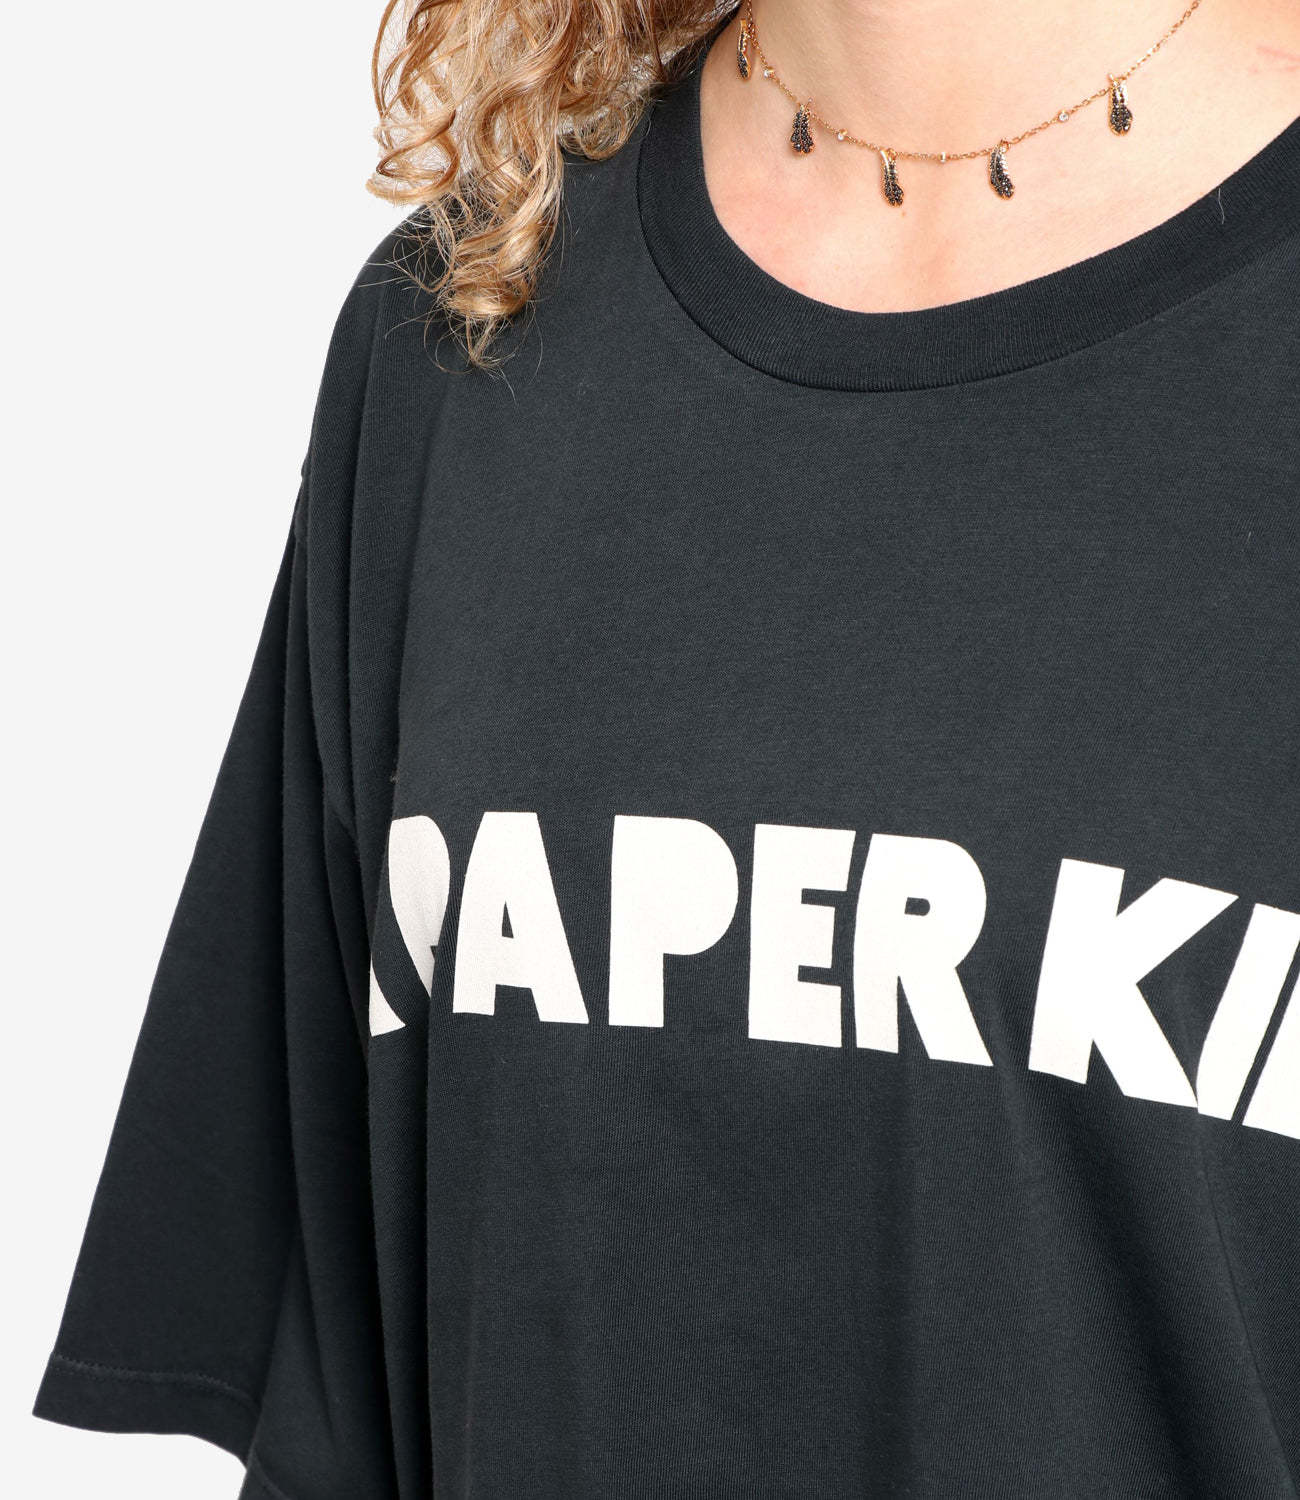 A Paper Kid | T-Shirt Black